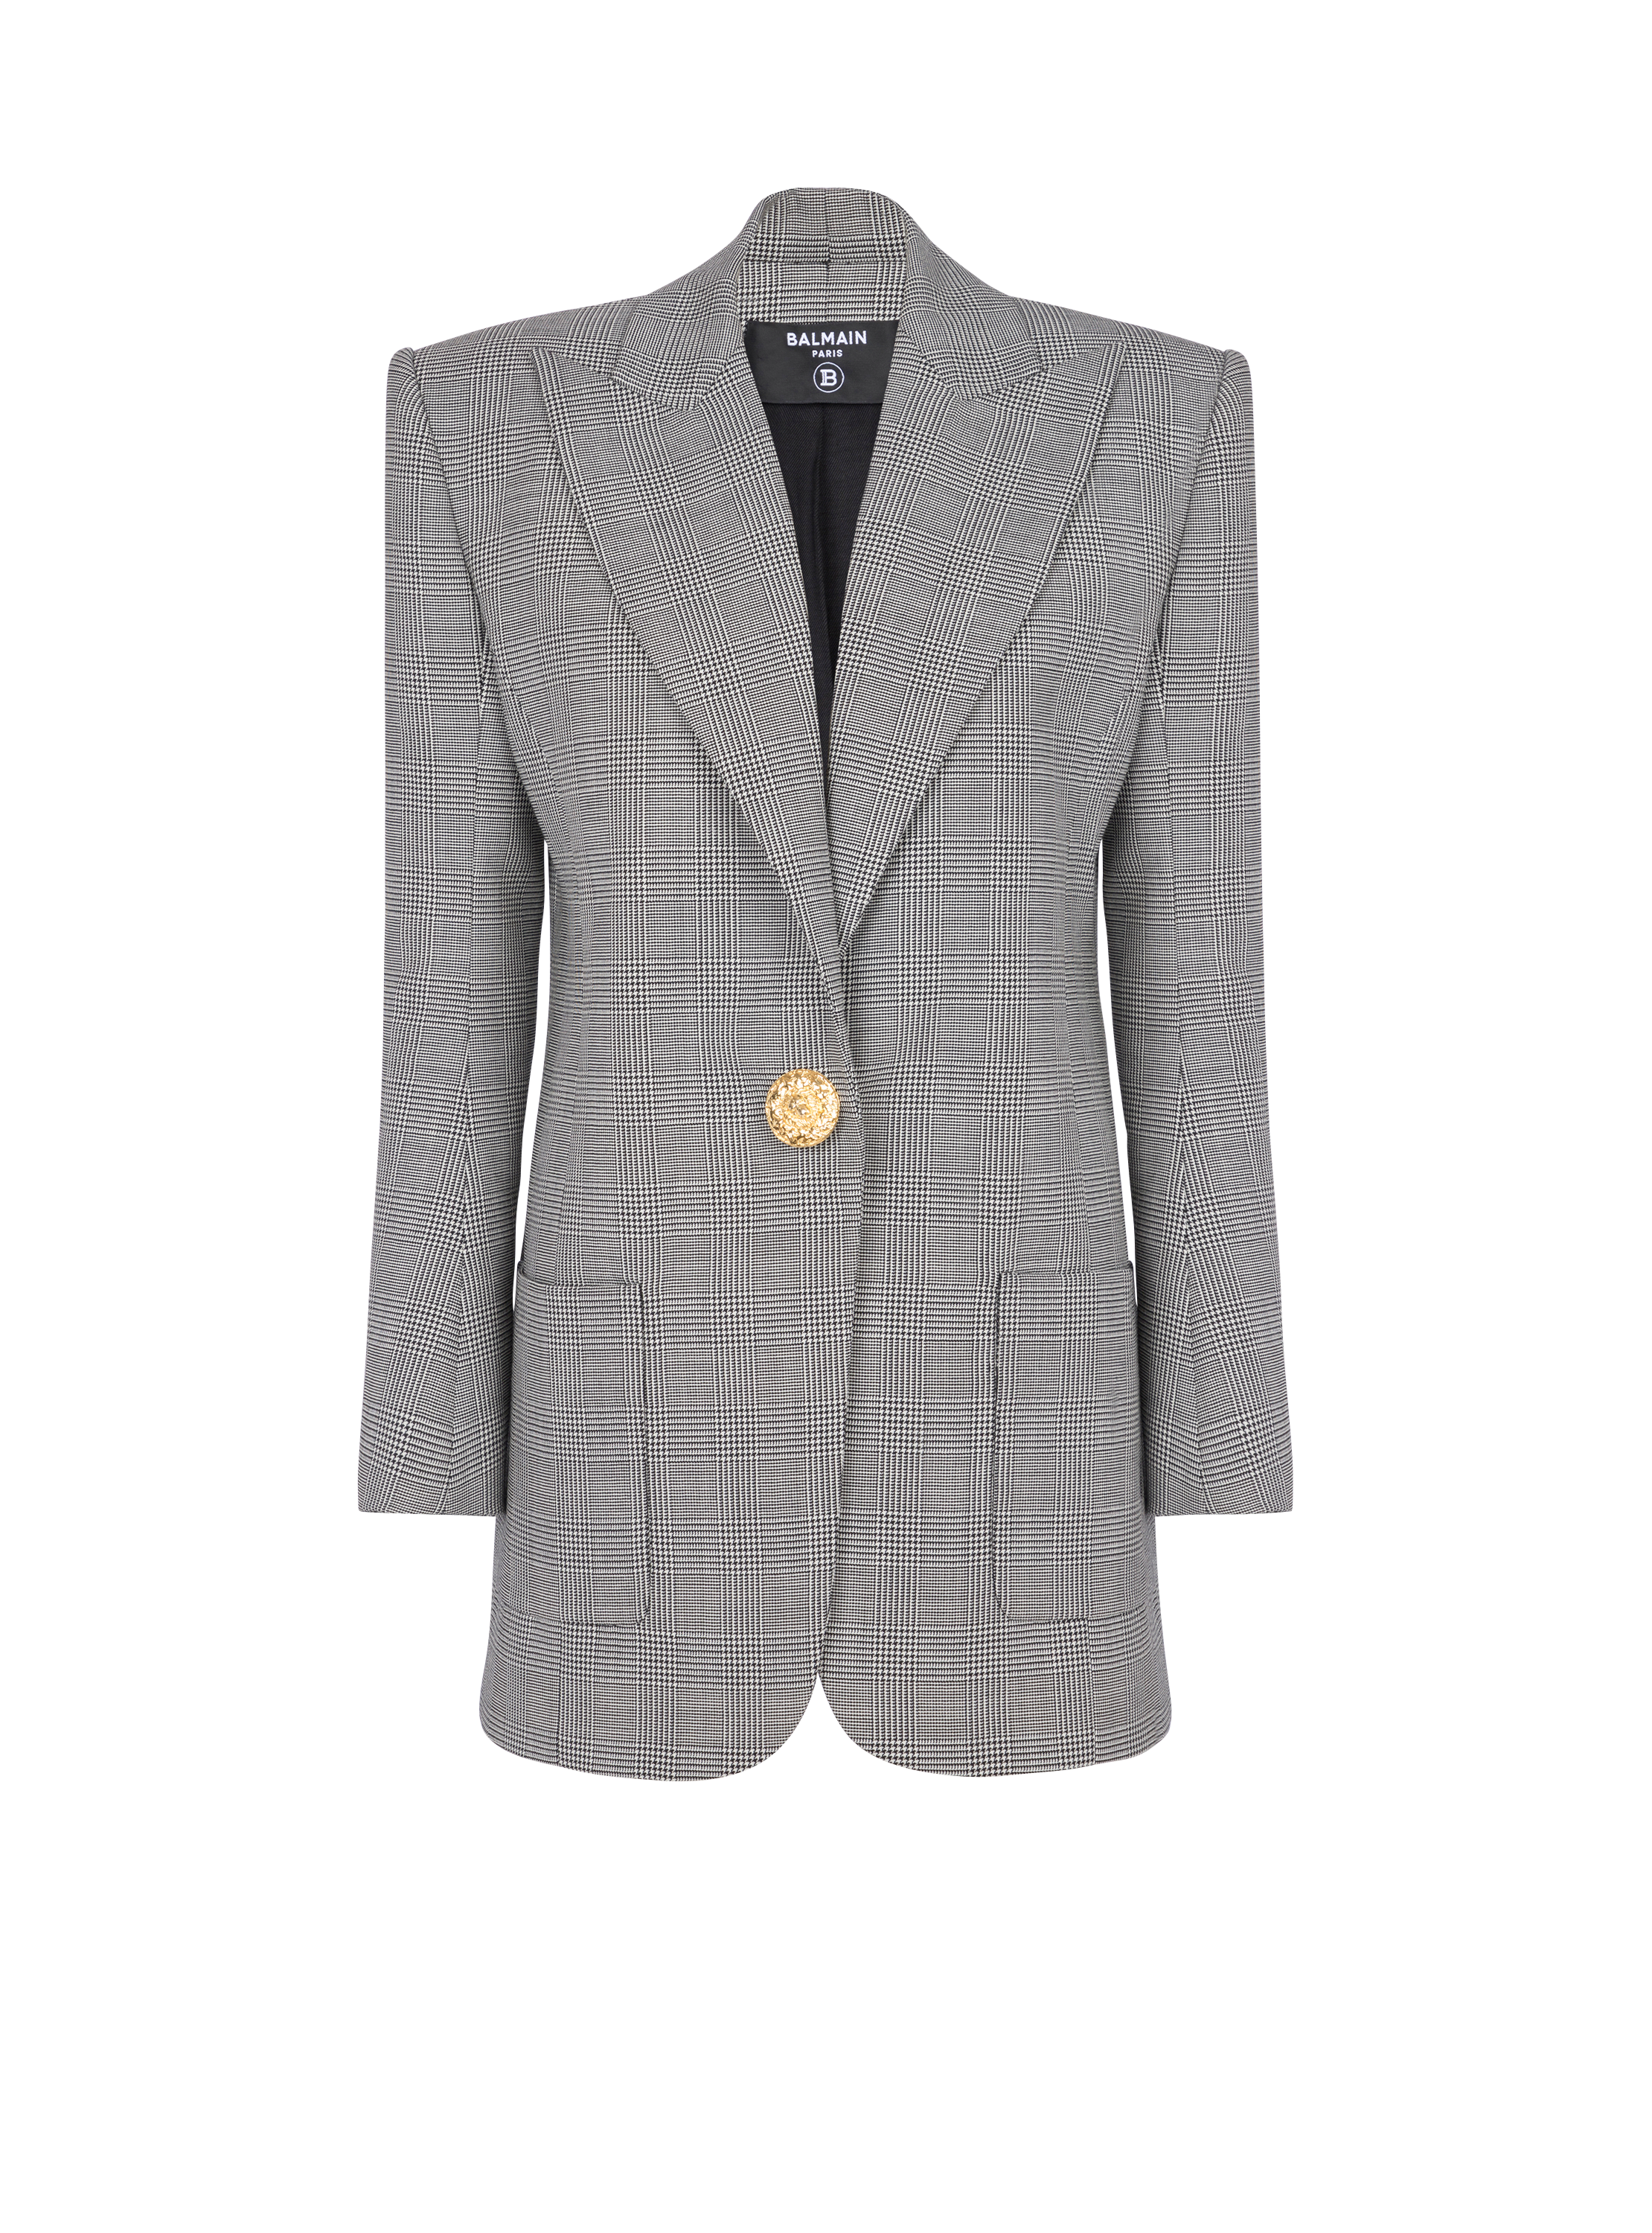 1-button wool jacket, black, hi-res